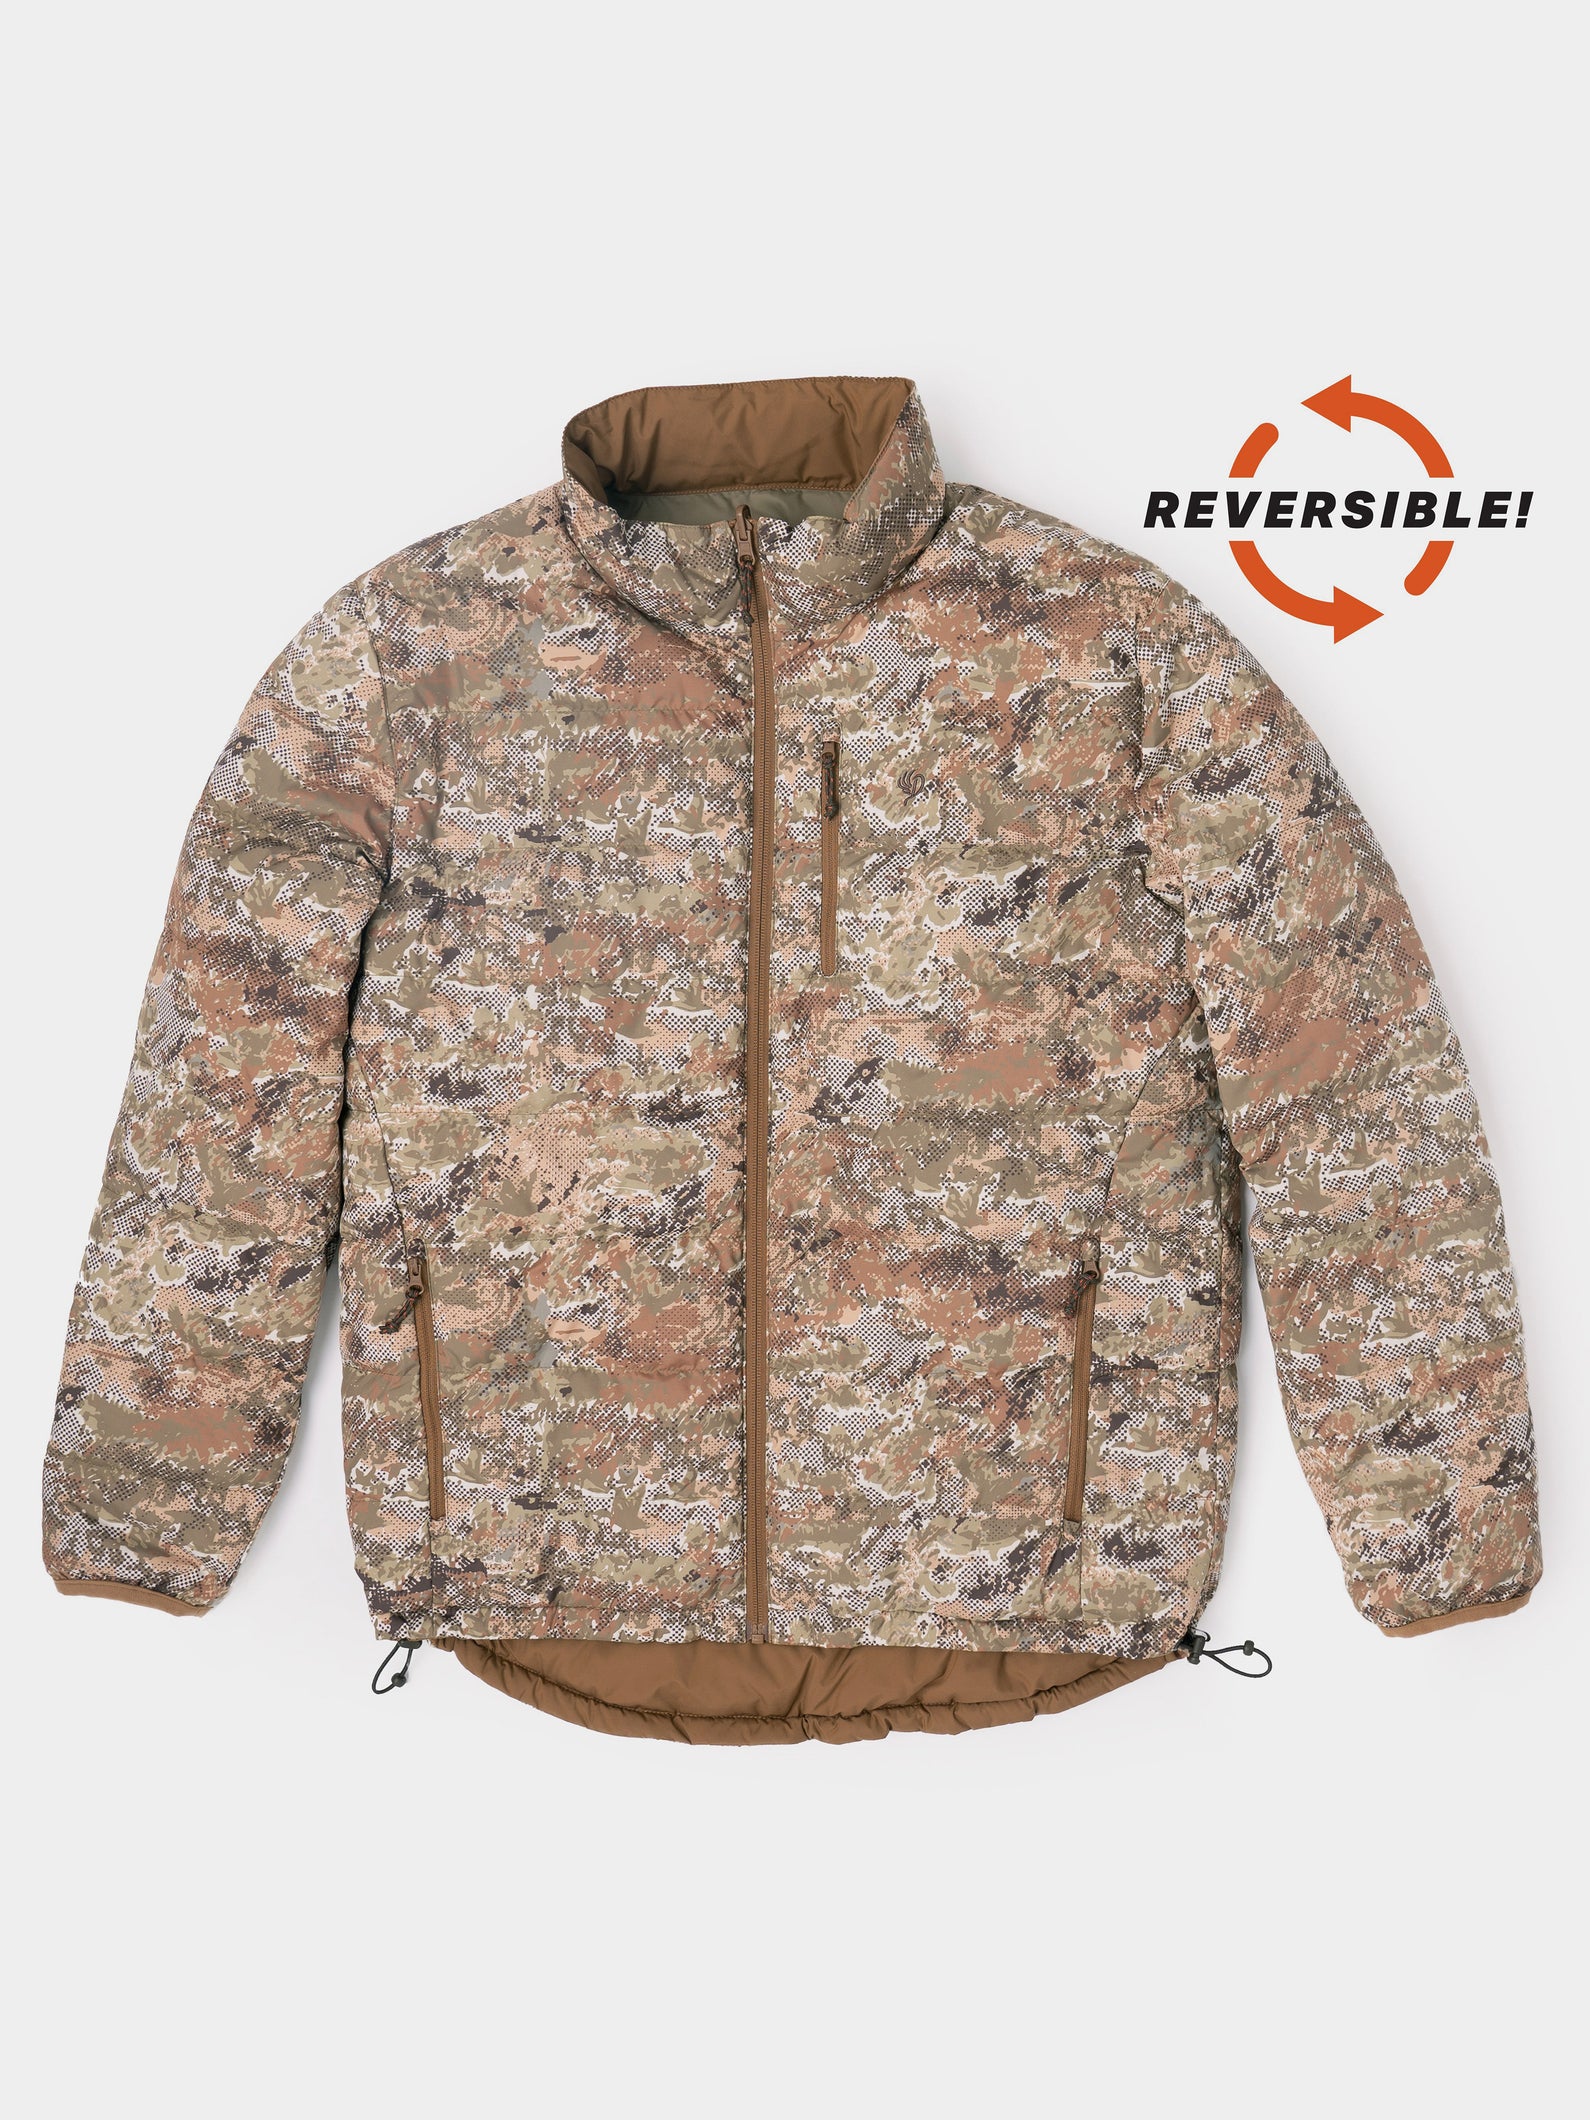 DryDown Reversible Jacket - Pintail / Midland